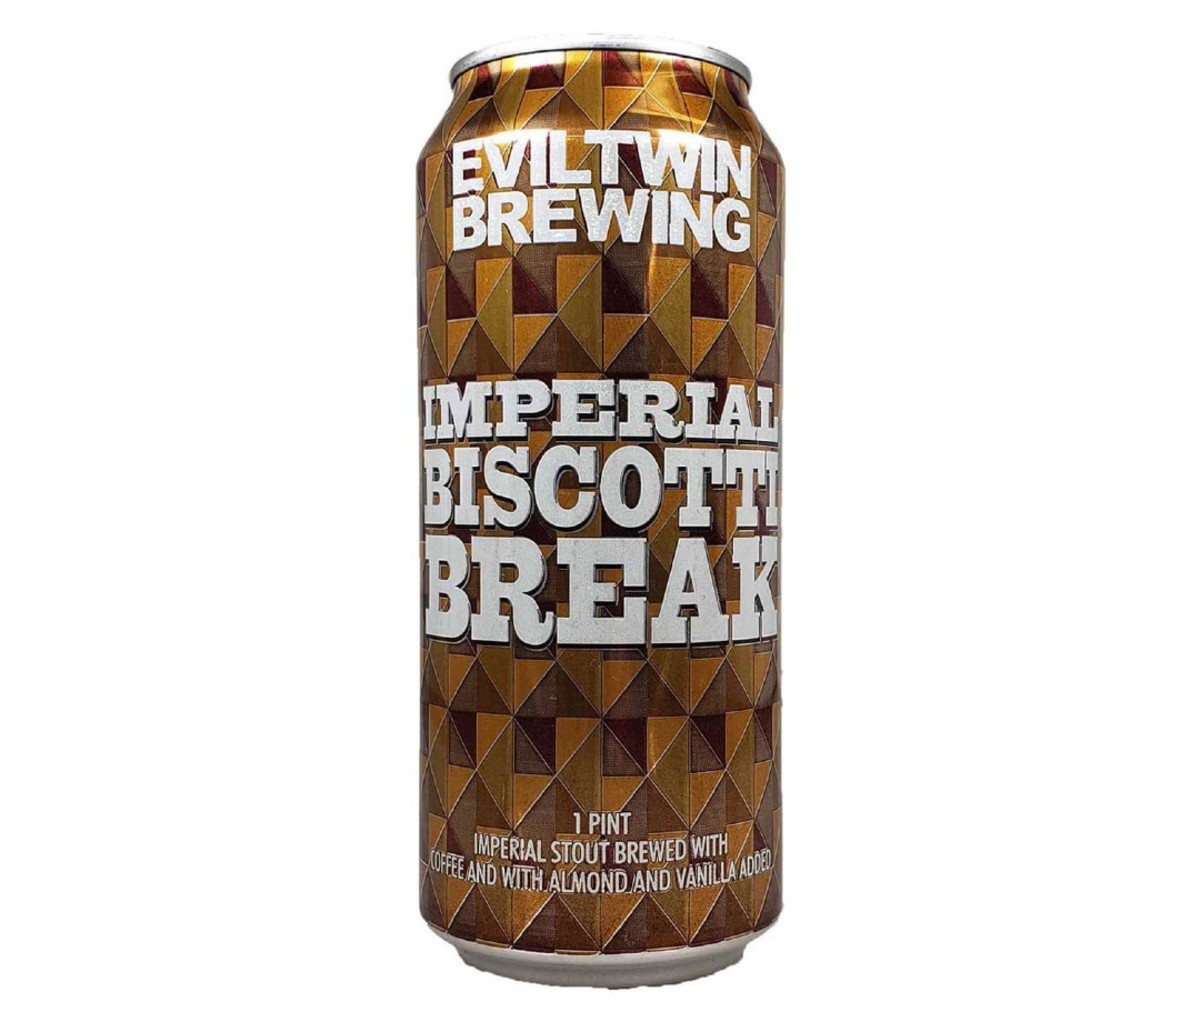 A can of Evil Twin Imperial Biscotti Break